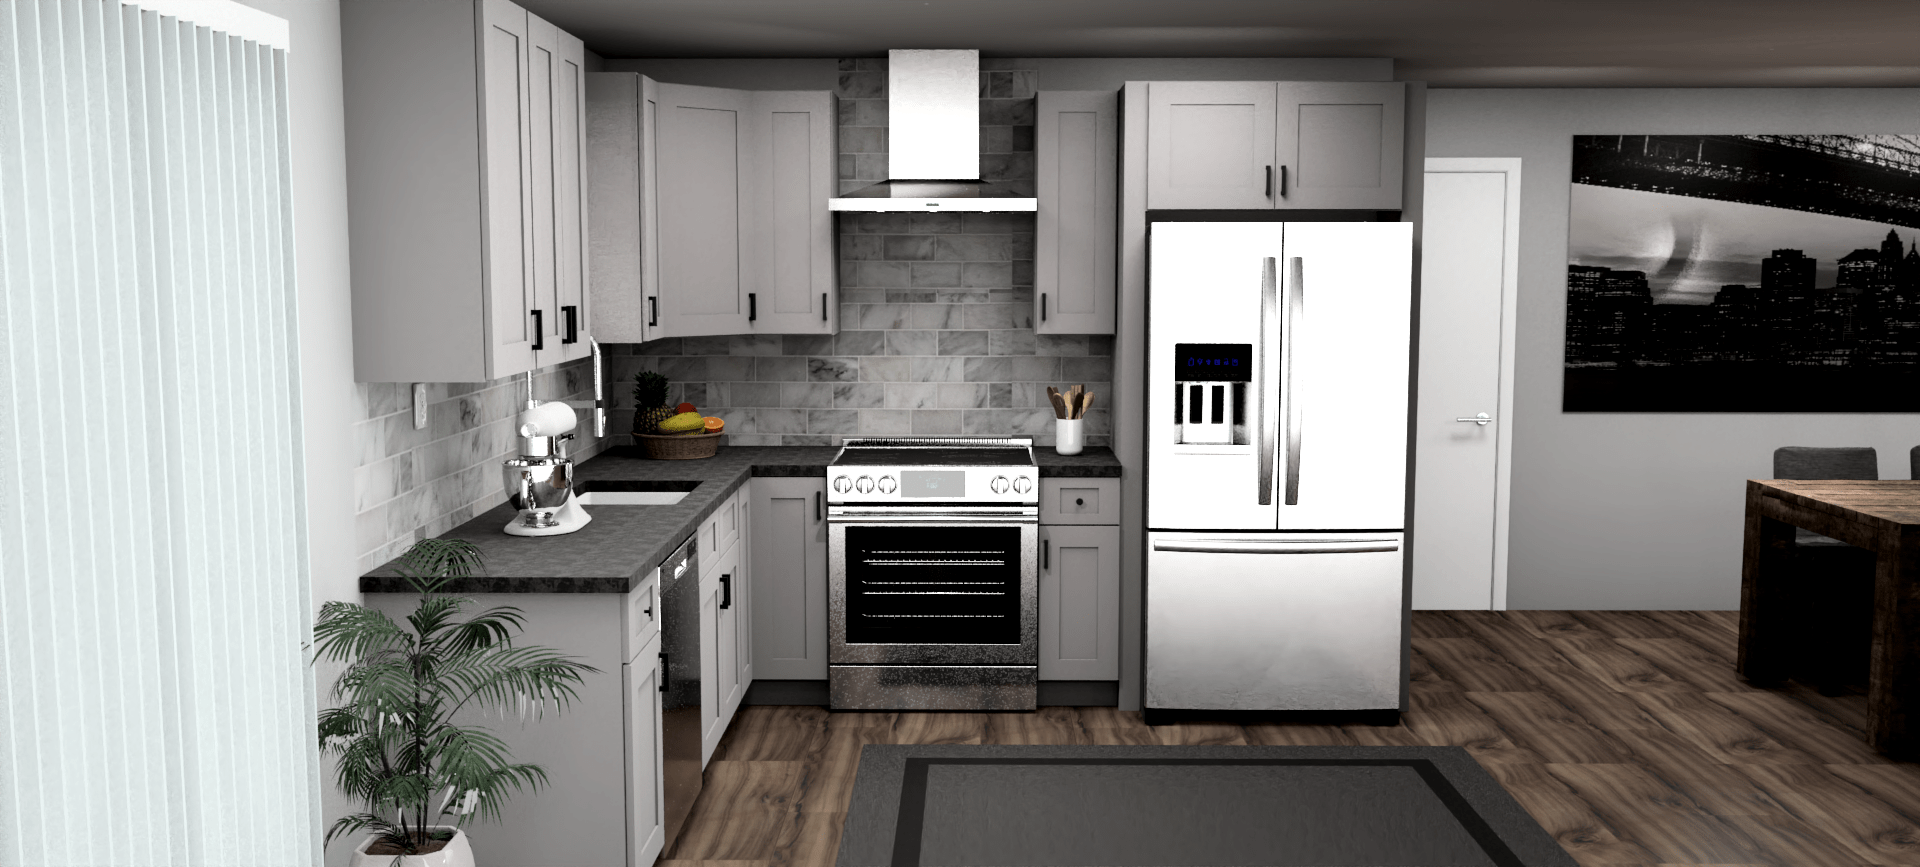 Fabuwood Allure Galaxy Nickel 9 x 10 L Shaped Kitchen Front Layout Photo